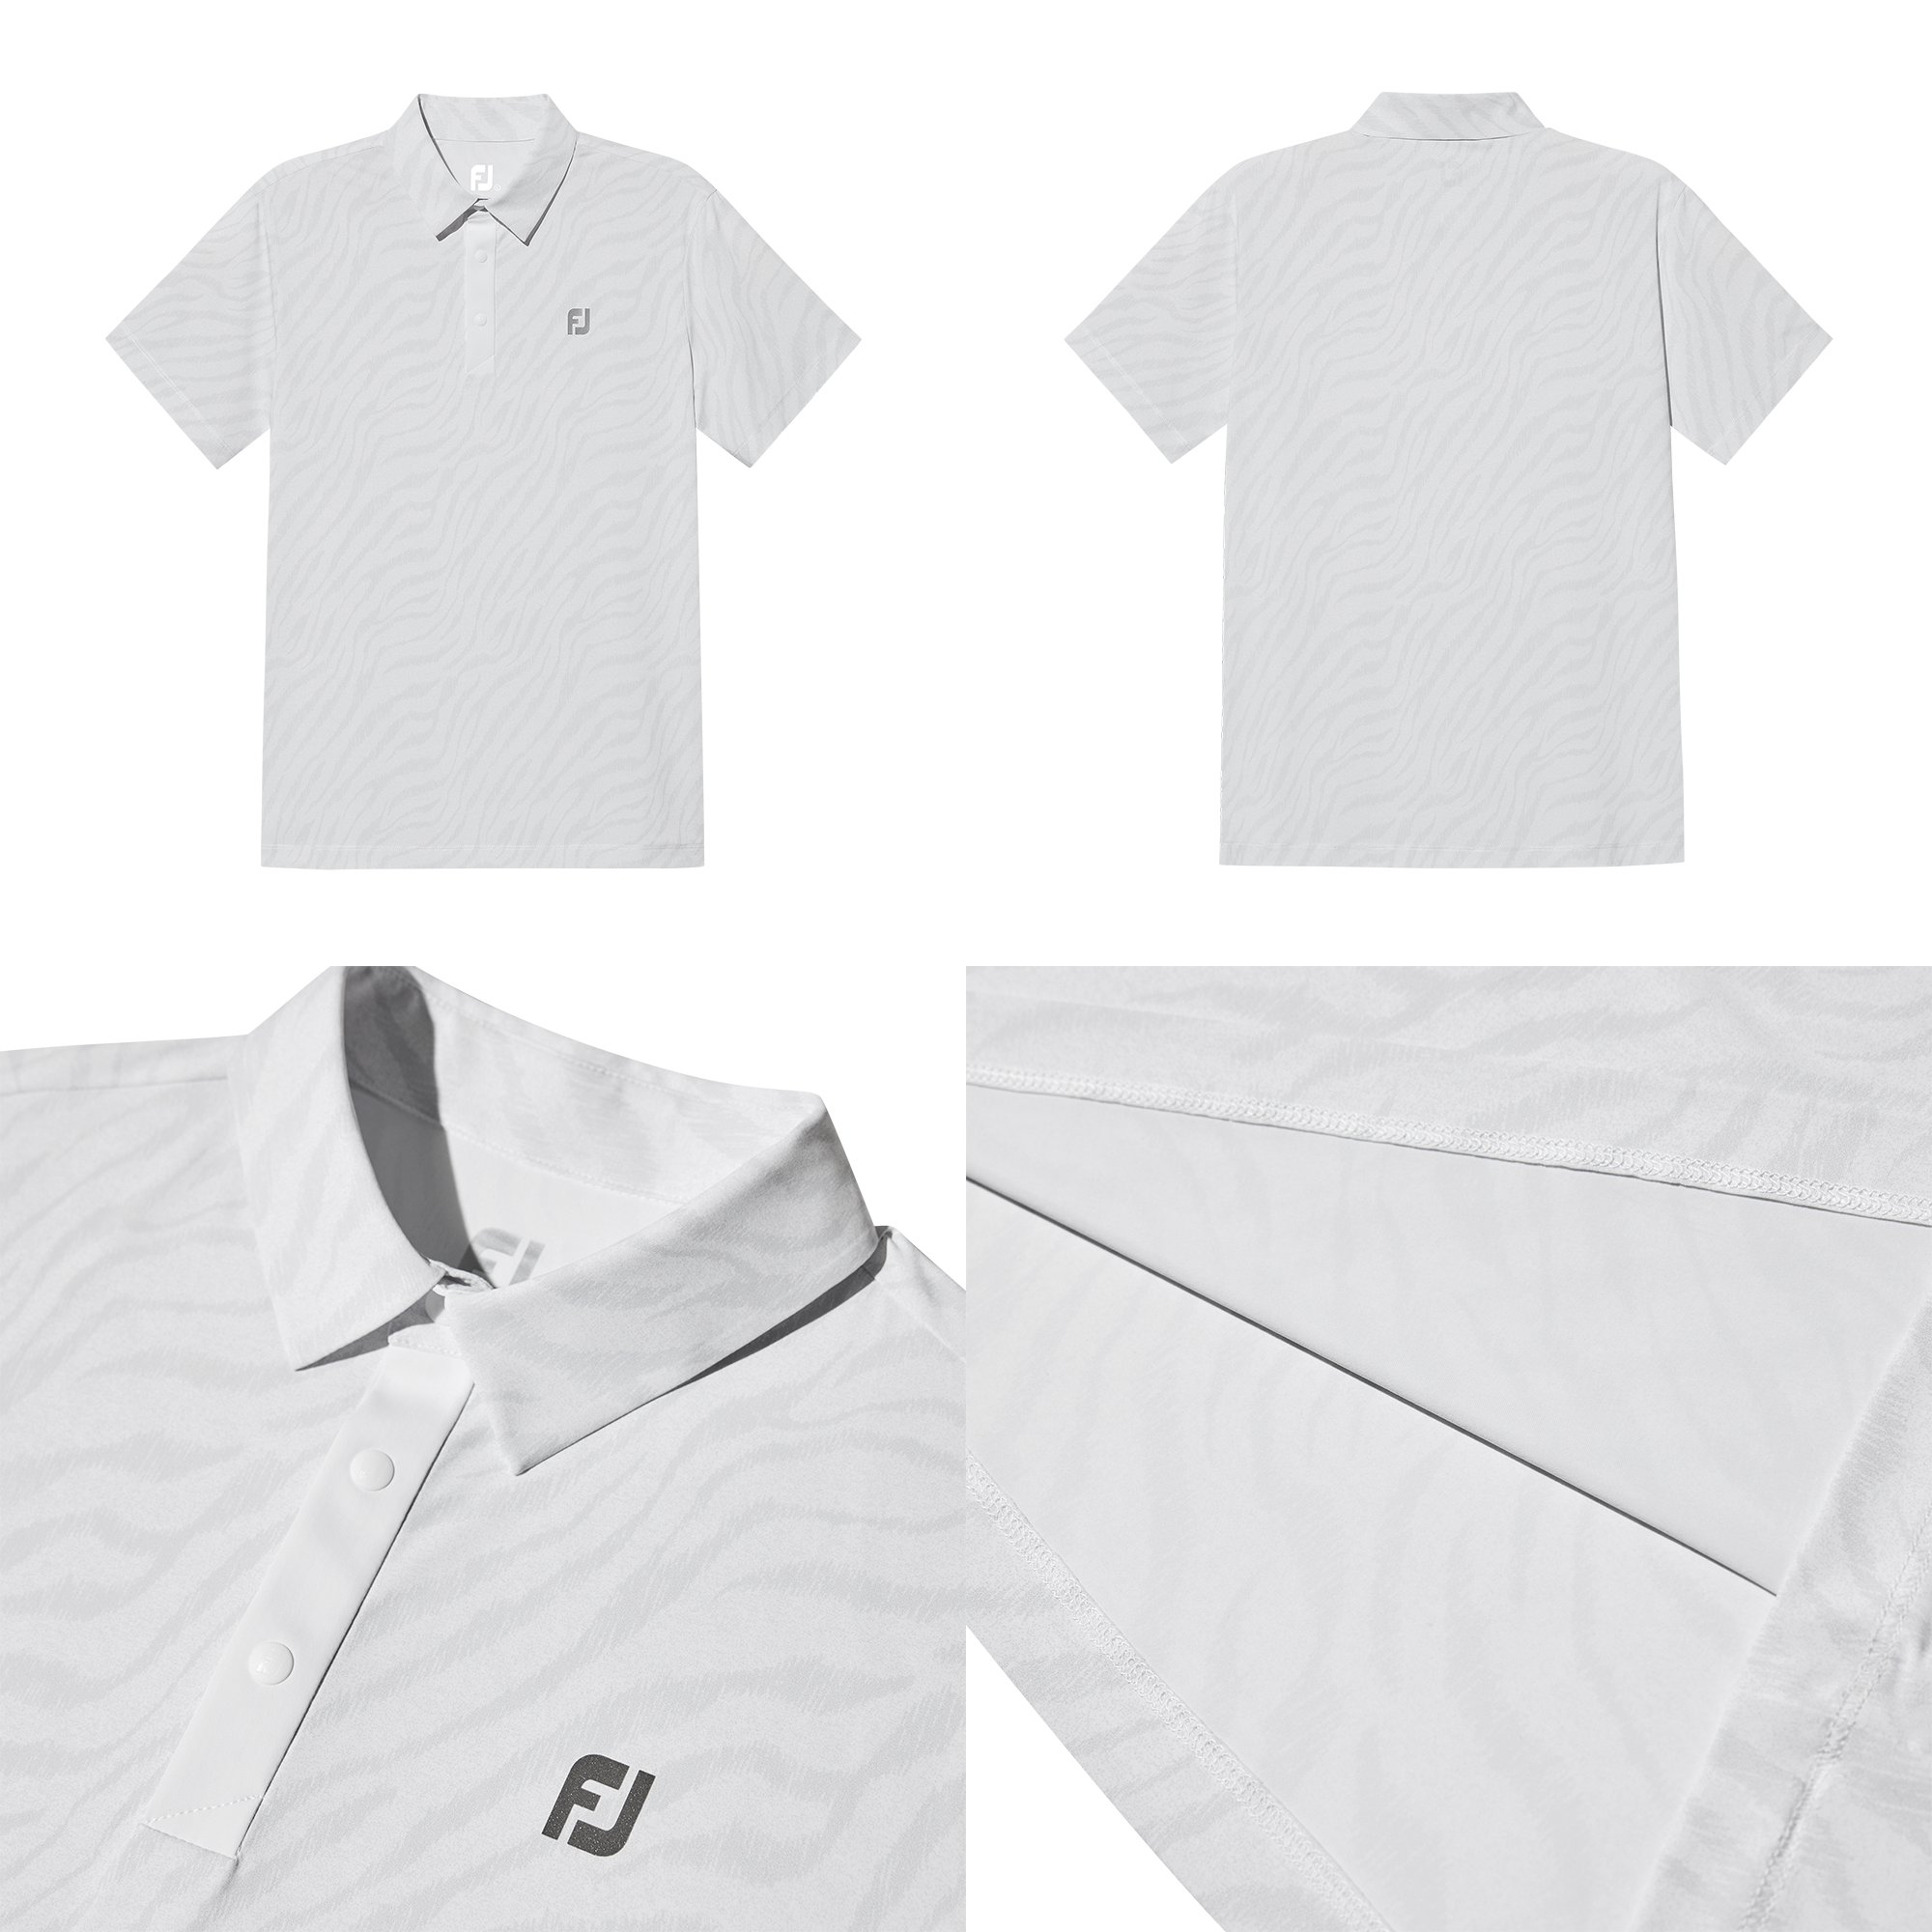 Pattern Polo Shirt